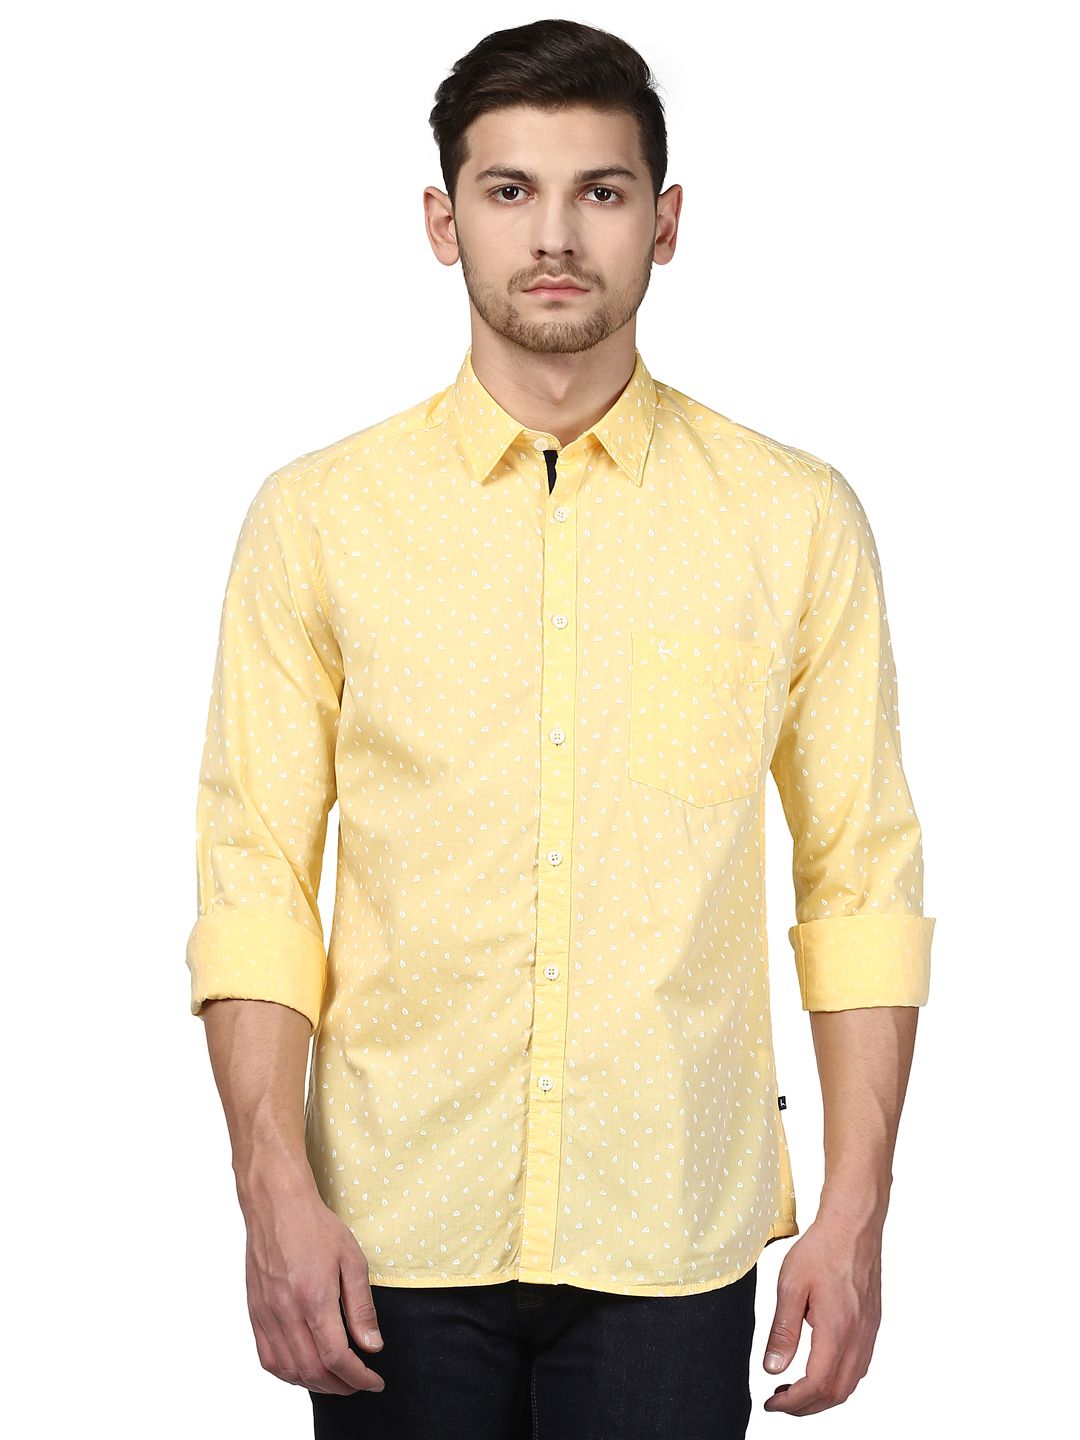 Parx Yellow Slim Fit Shirt - Buy Parx Yellow Slim Fit Shirt Online at ...